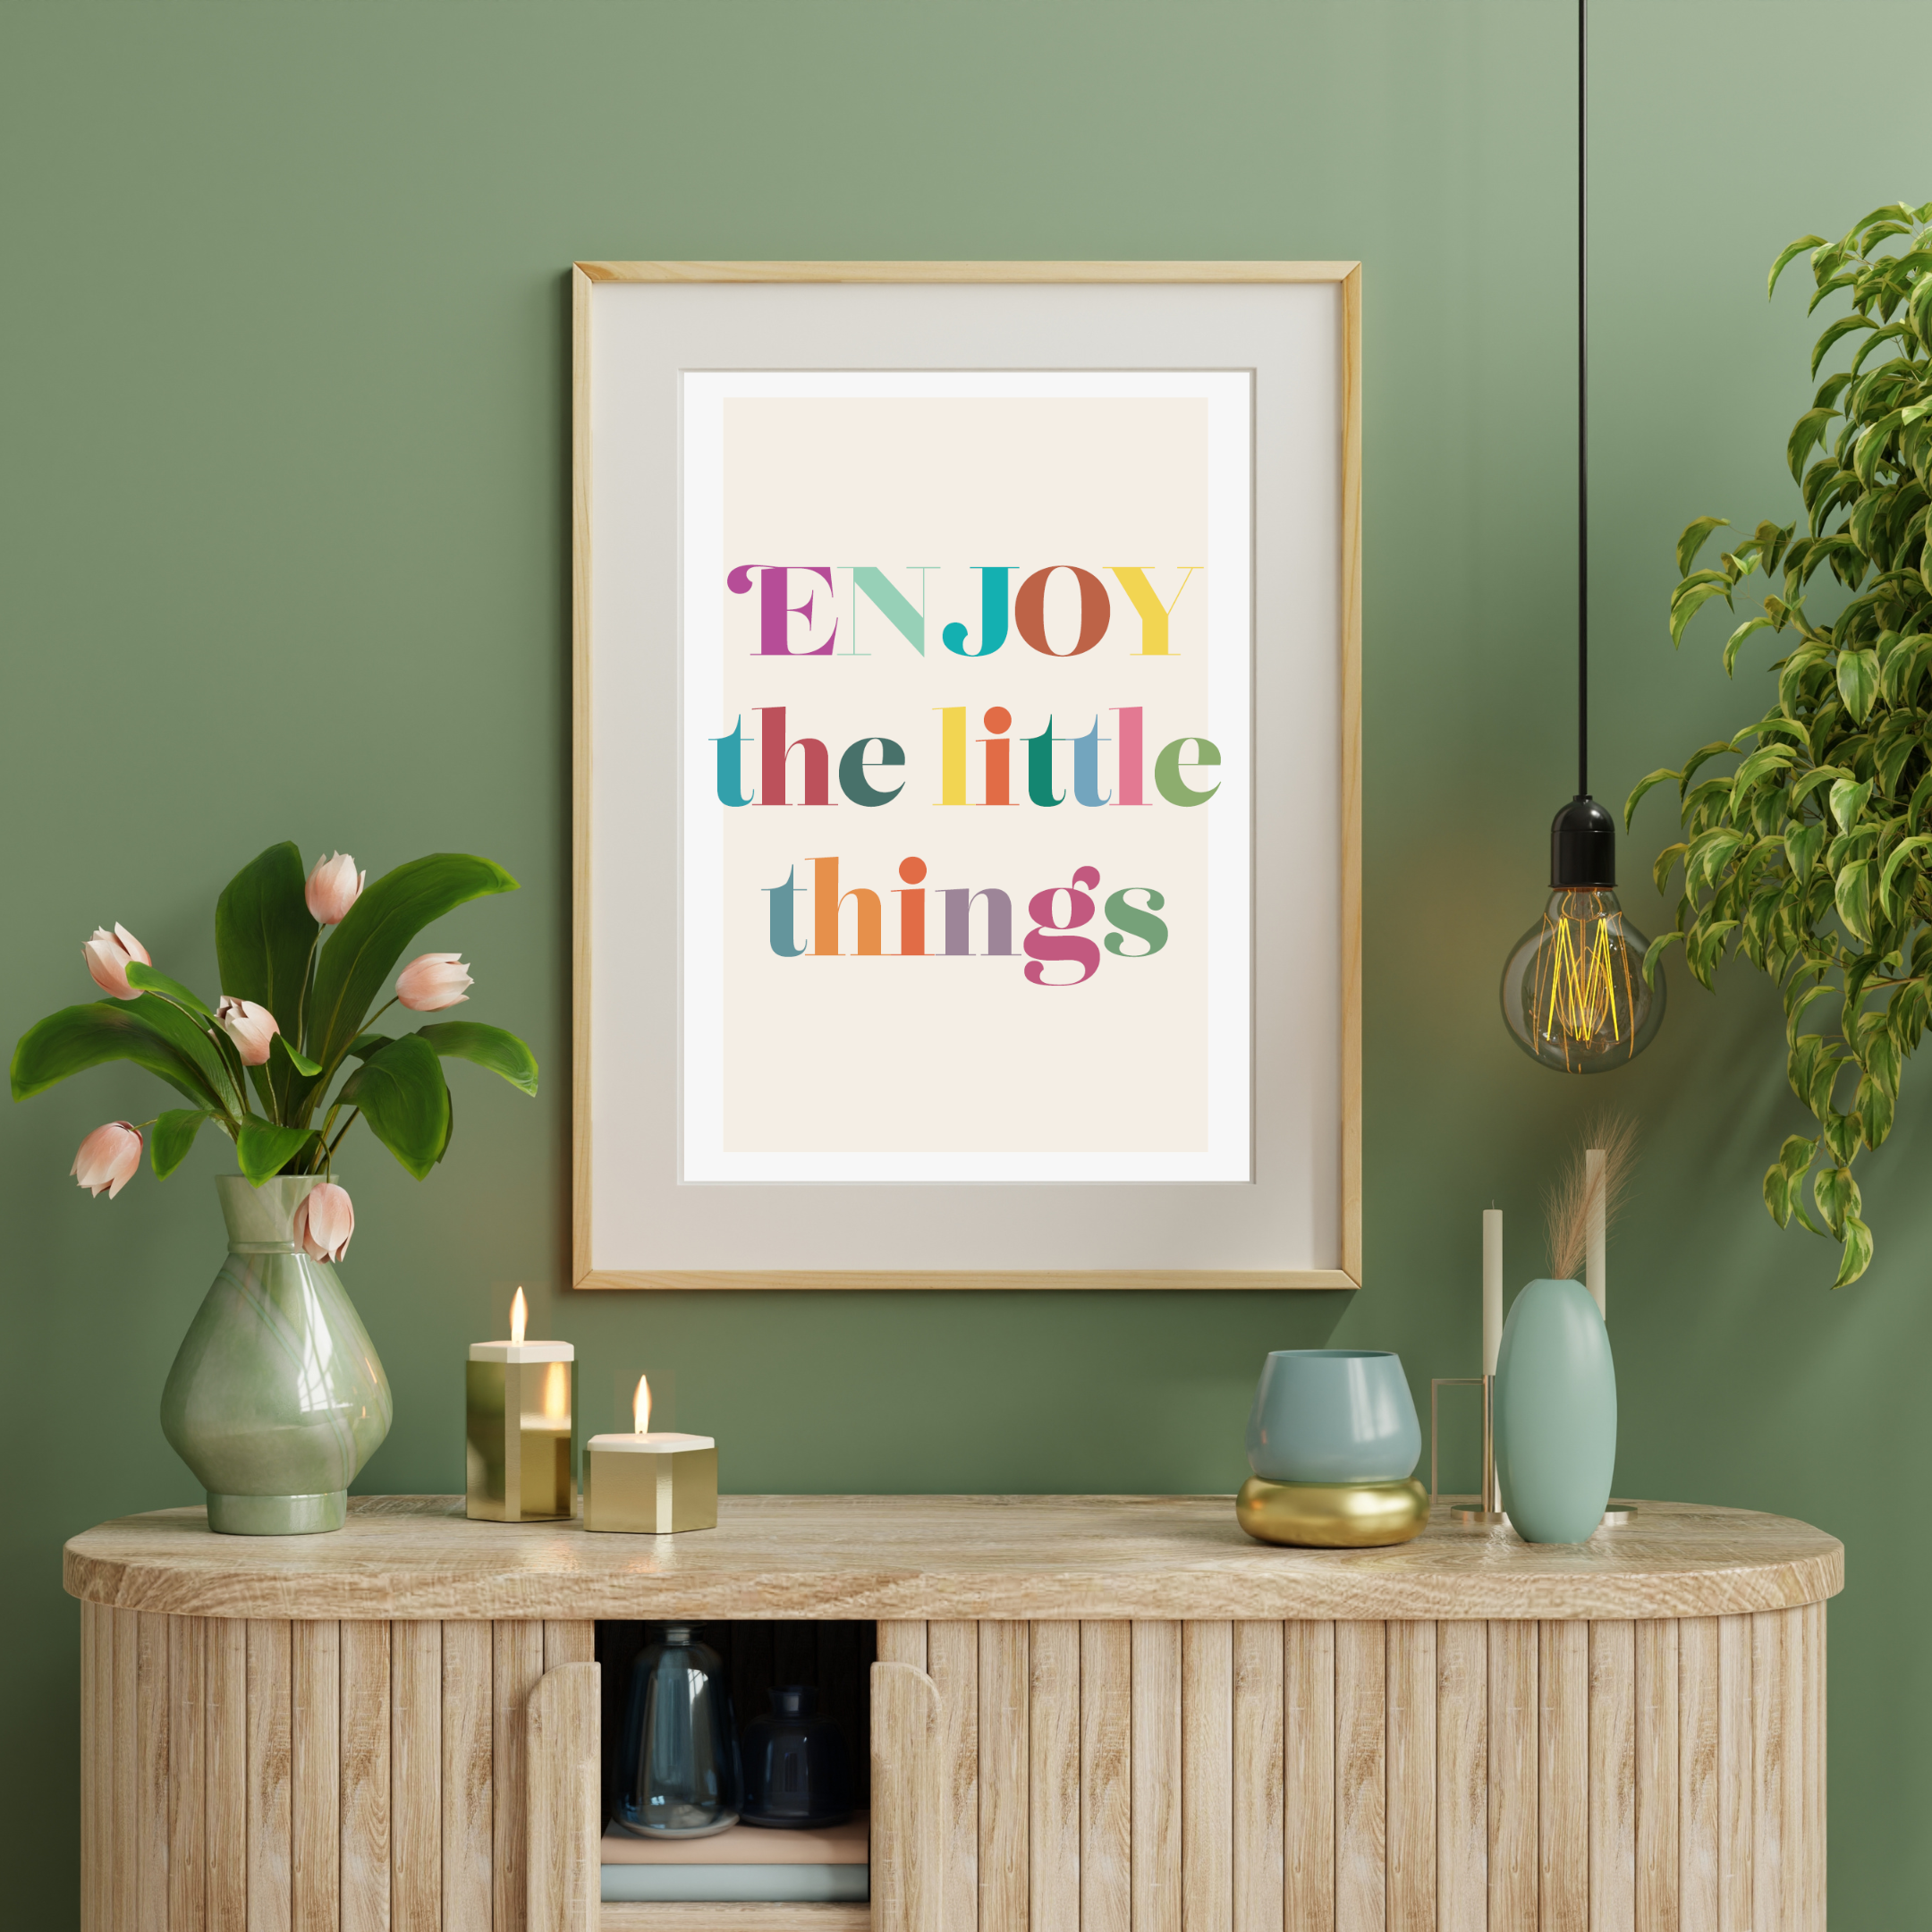 Enjoy the little things - Plakat